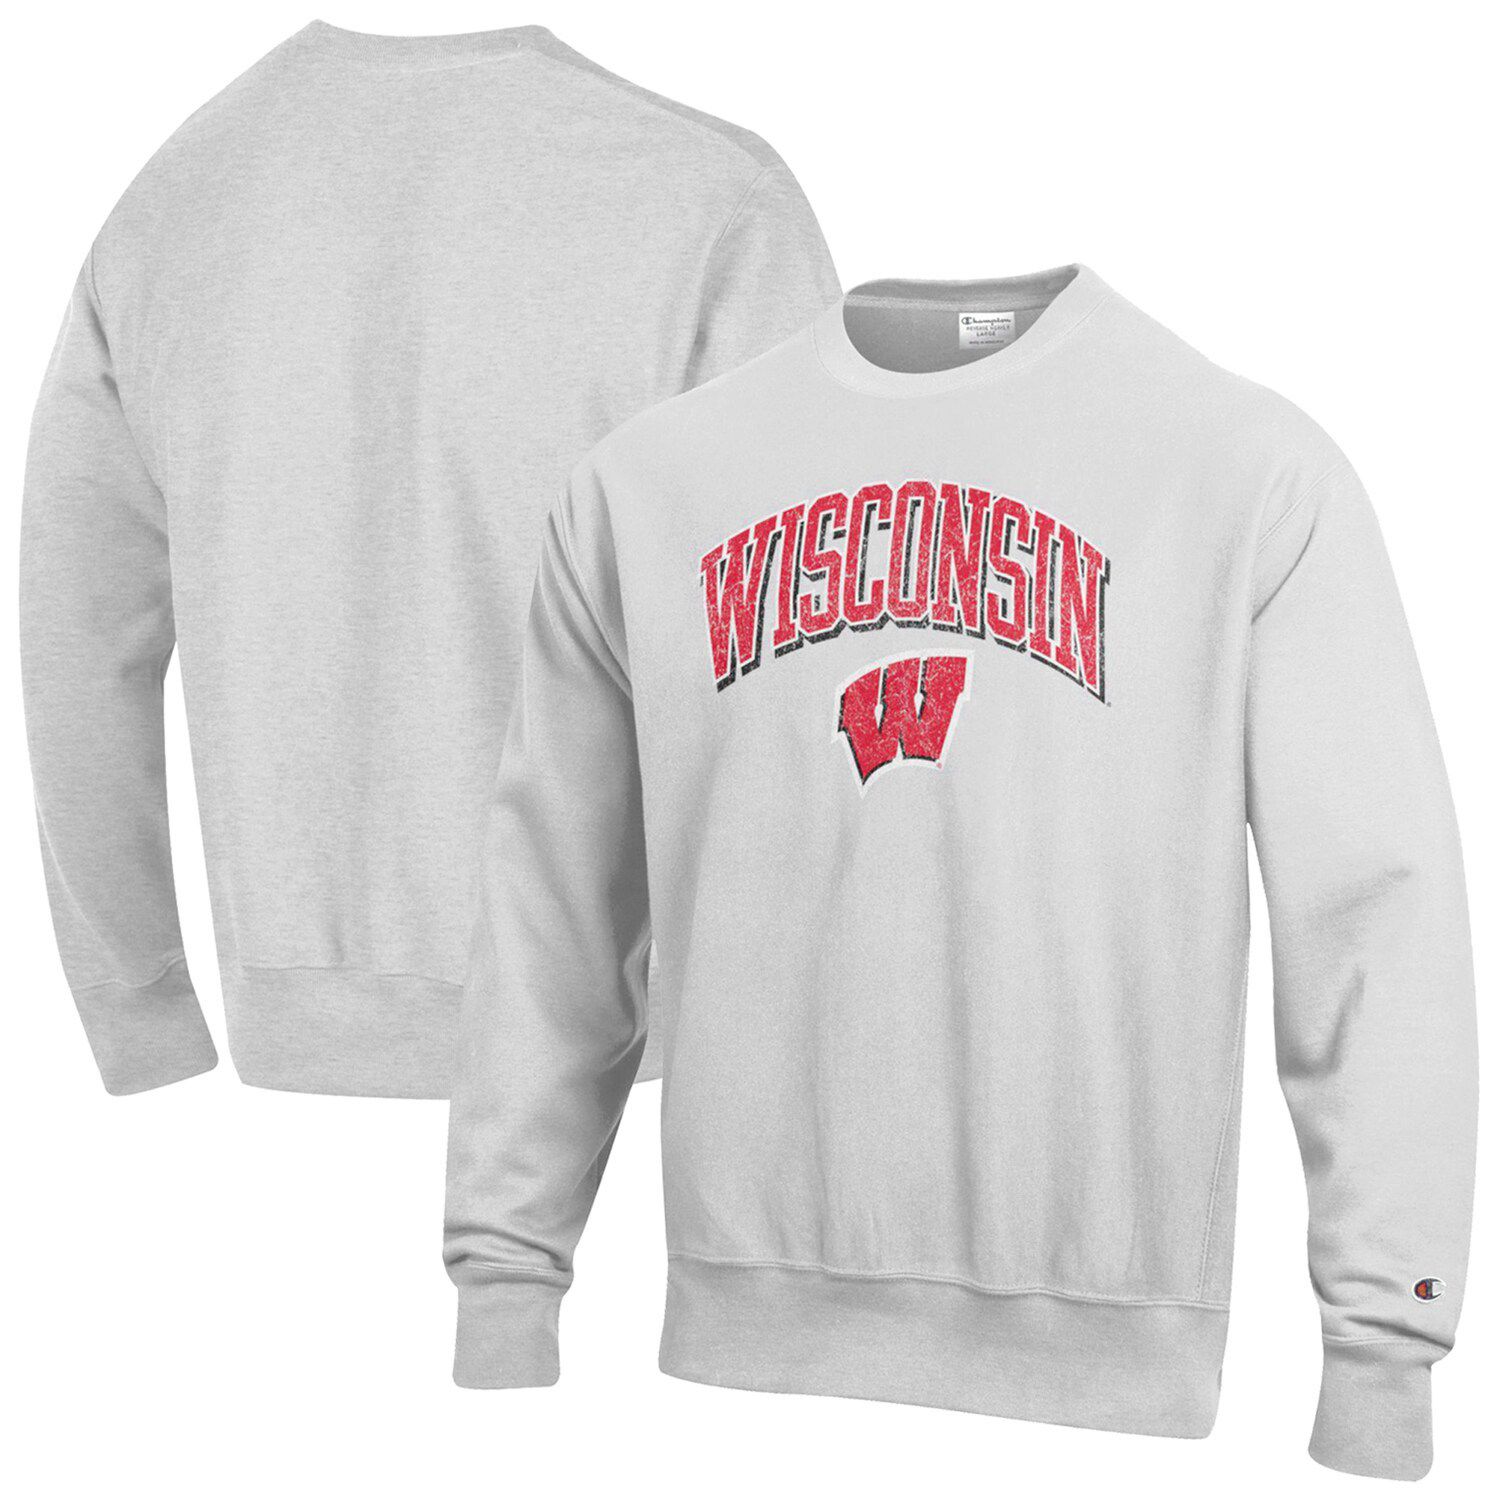 Wisconsin Crewneck State Sweatshirt Wisconsin Shirt College Sweatshirt Wisconsin Sweatshirt Unisex Sweatshirt State Gifts